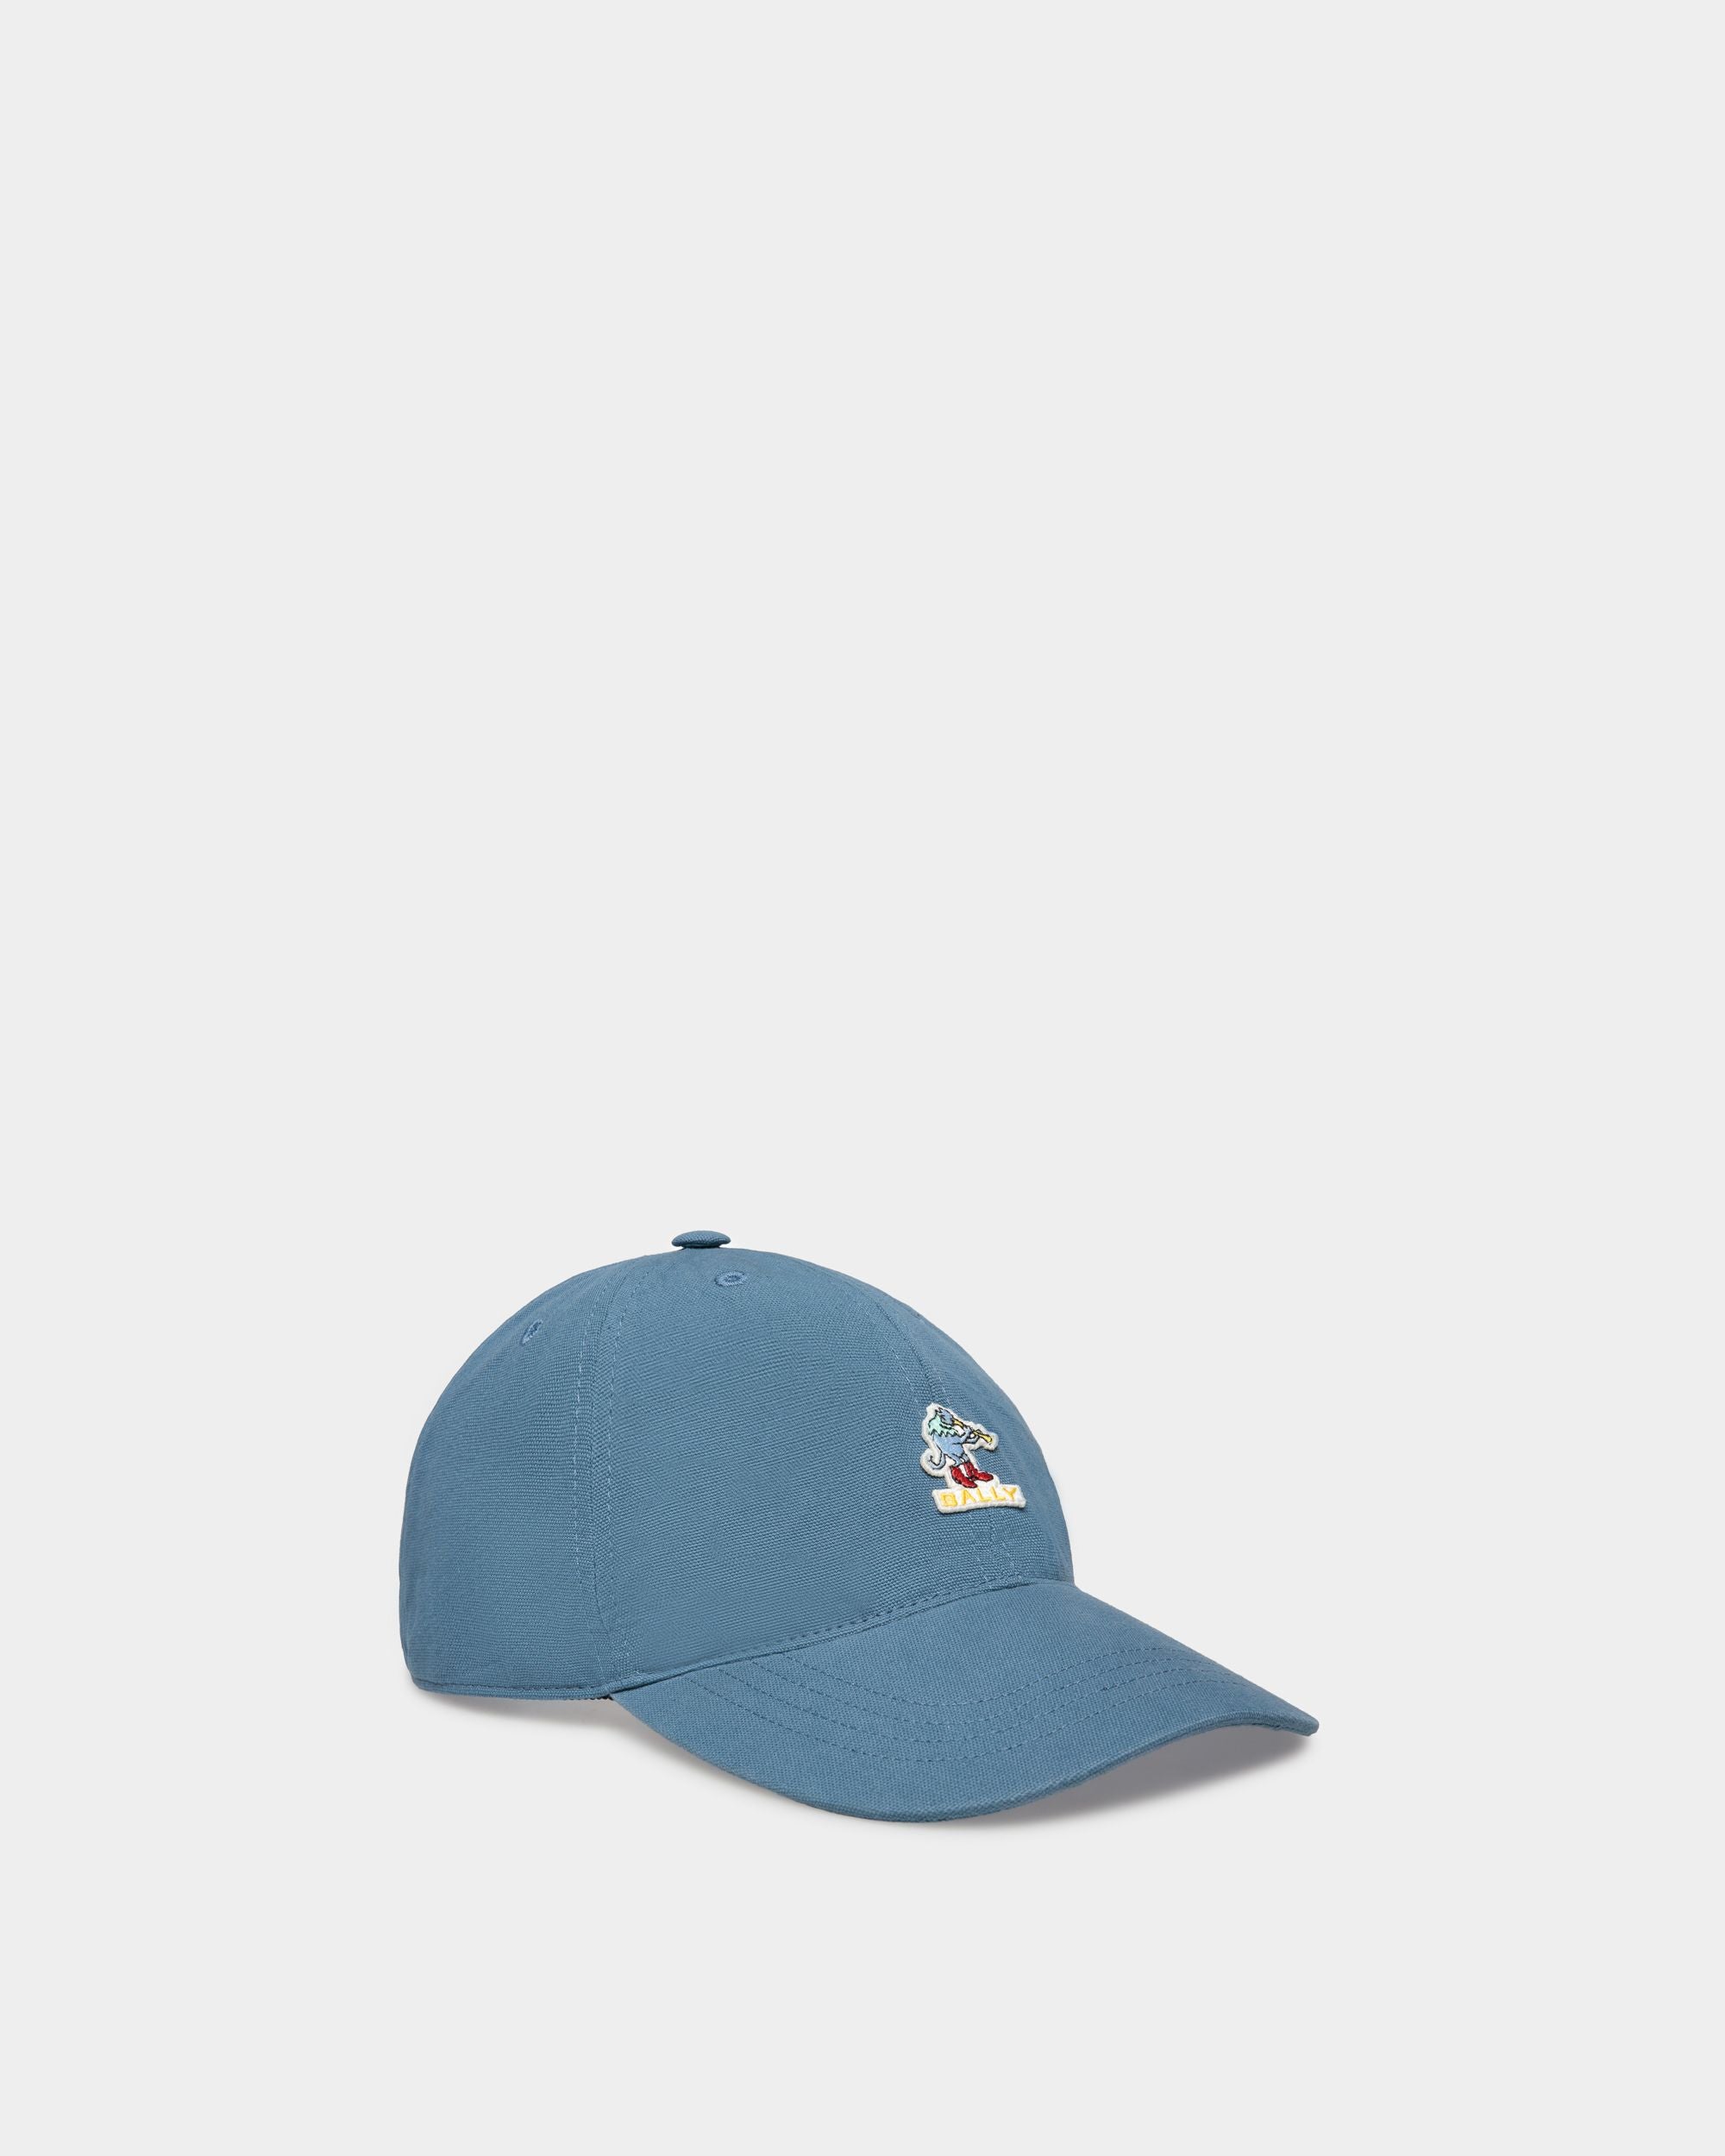 Men's Baseball Hat in Light Blue Cotton | Bally | Still Life Front